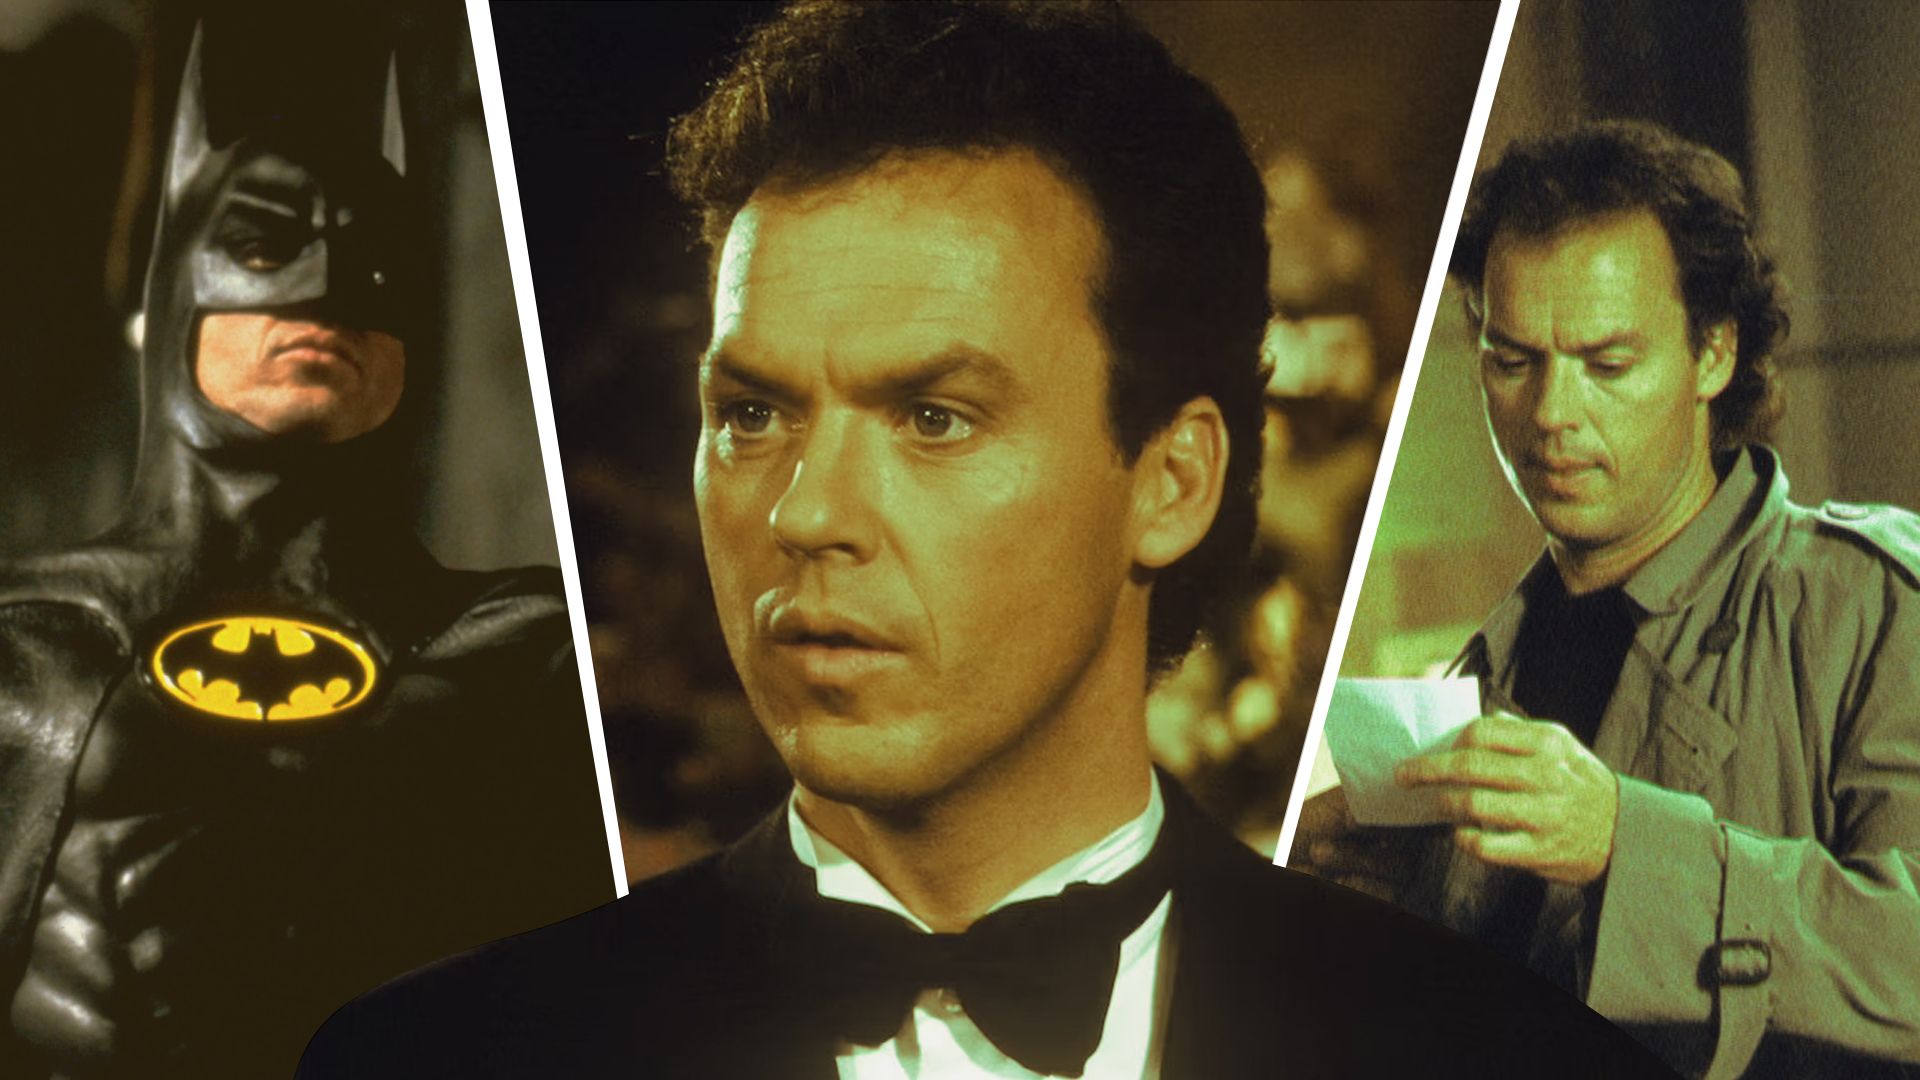 An edited image of Michael Keaton in Batman and Michael Keaton in Clean and Sober